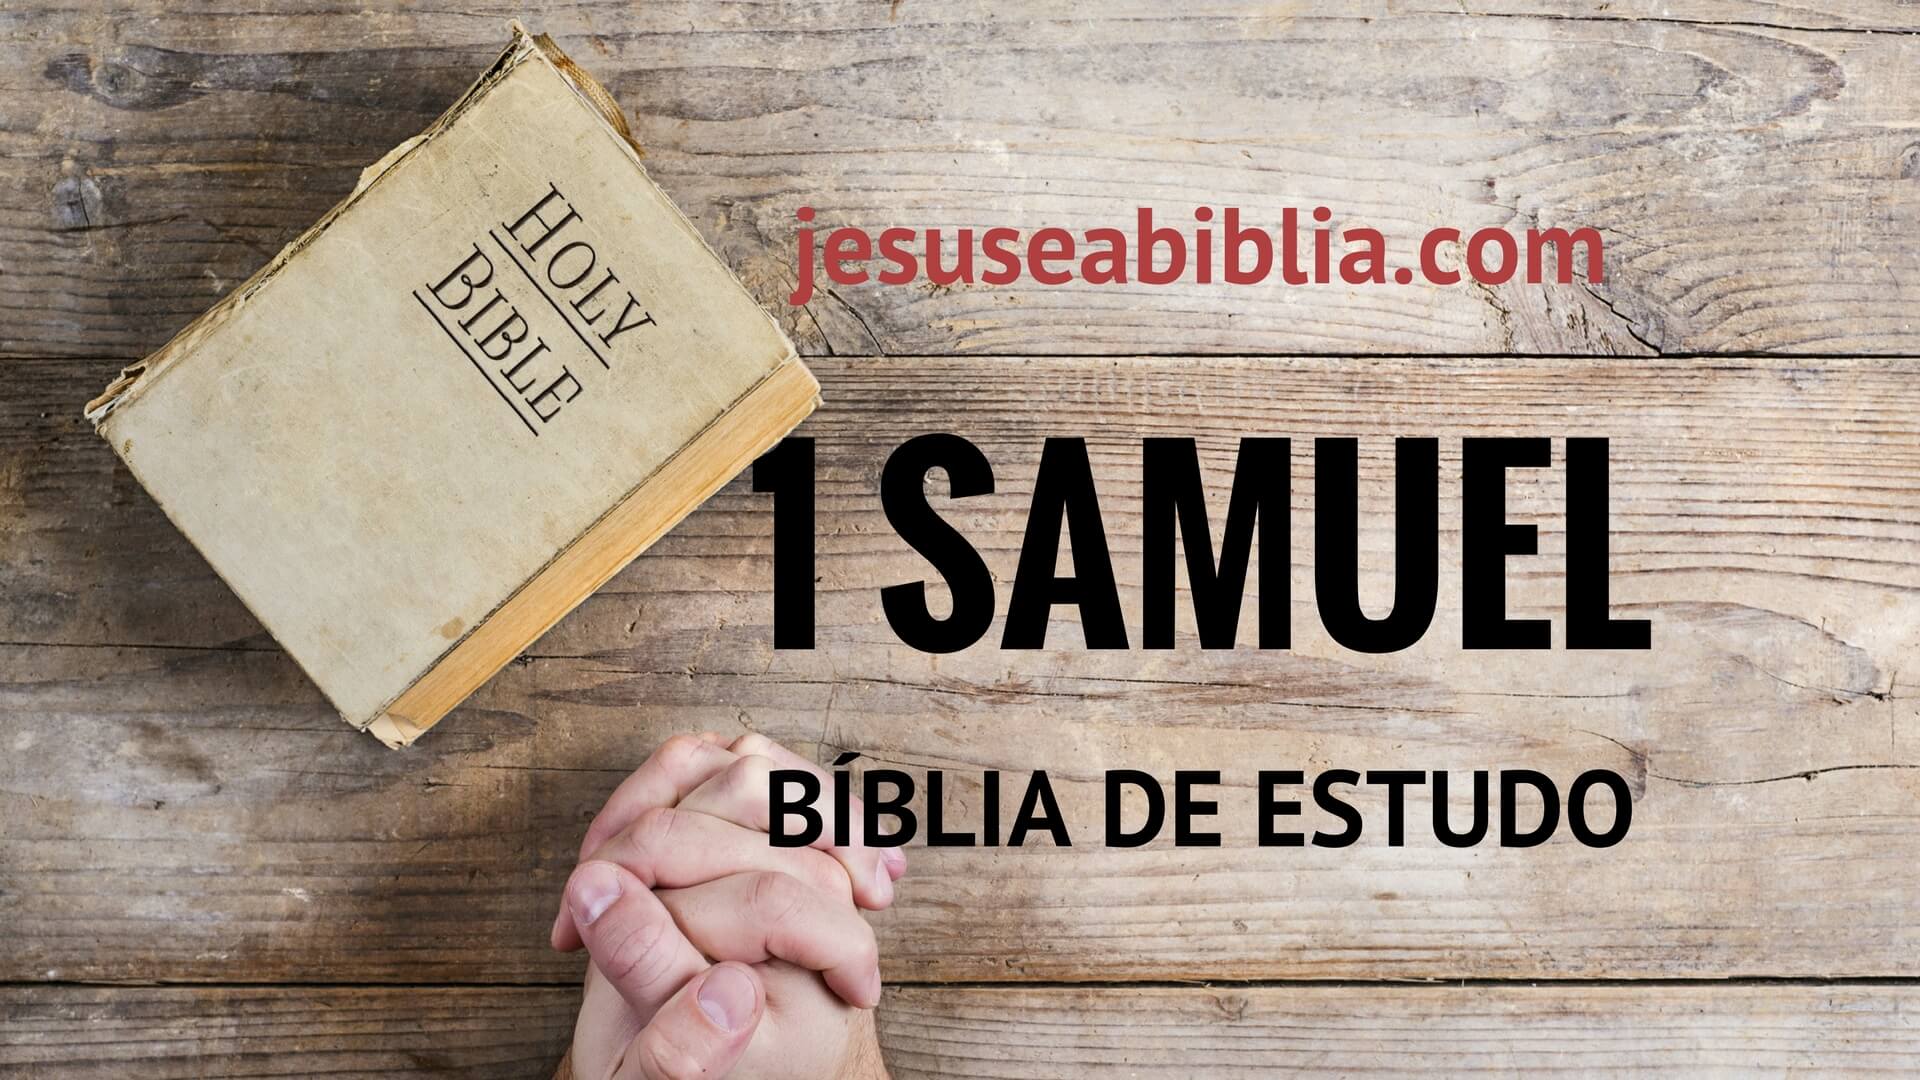 2 Samuel 18:12 - Bíblia